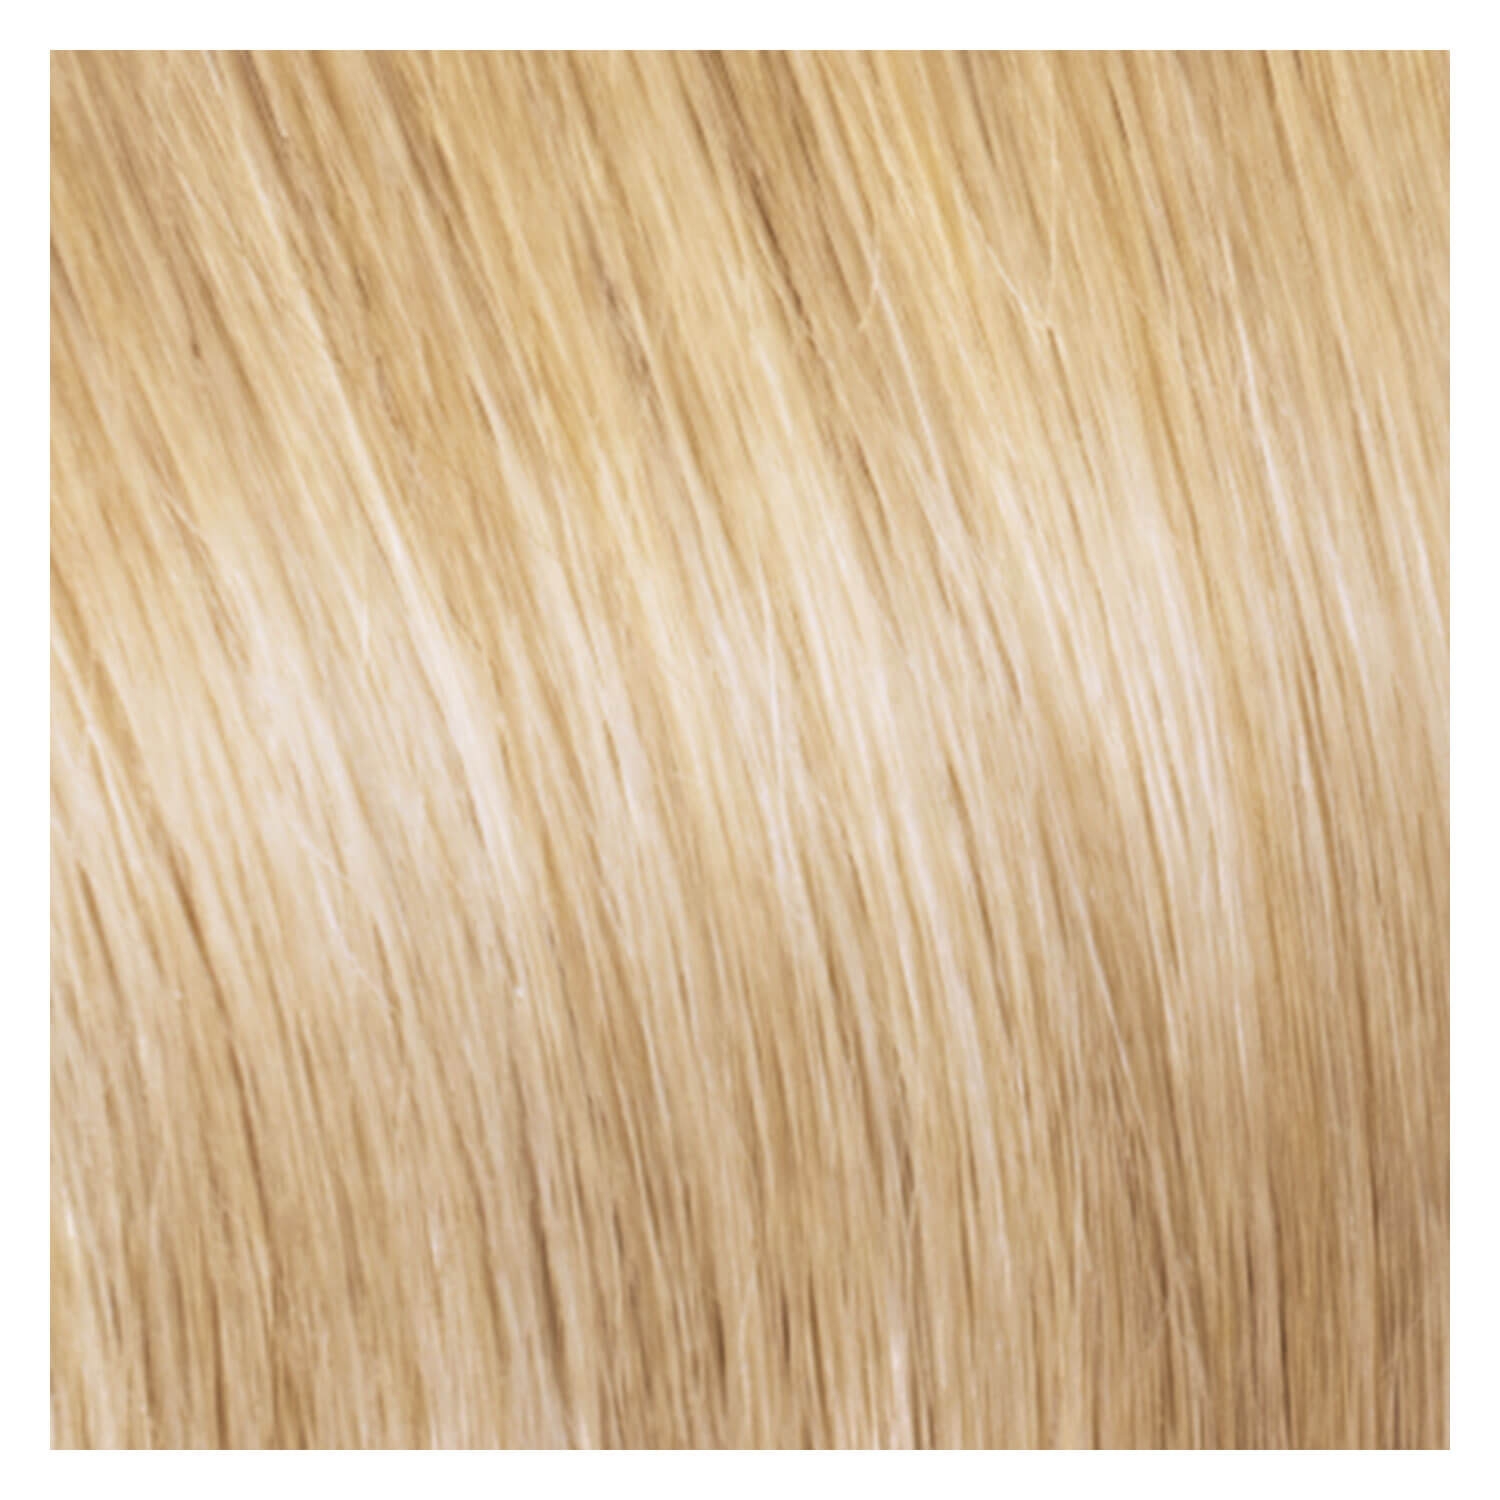 Produktbild von SHE Bonding-System Hair Extensions Straight - 25 Sehr helles Honigblond 55/60cm